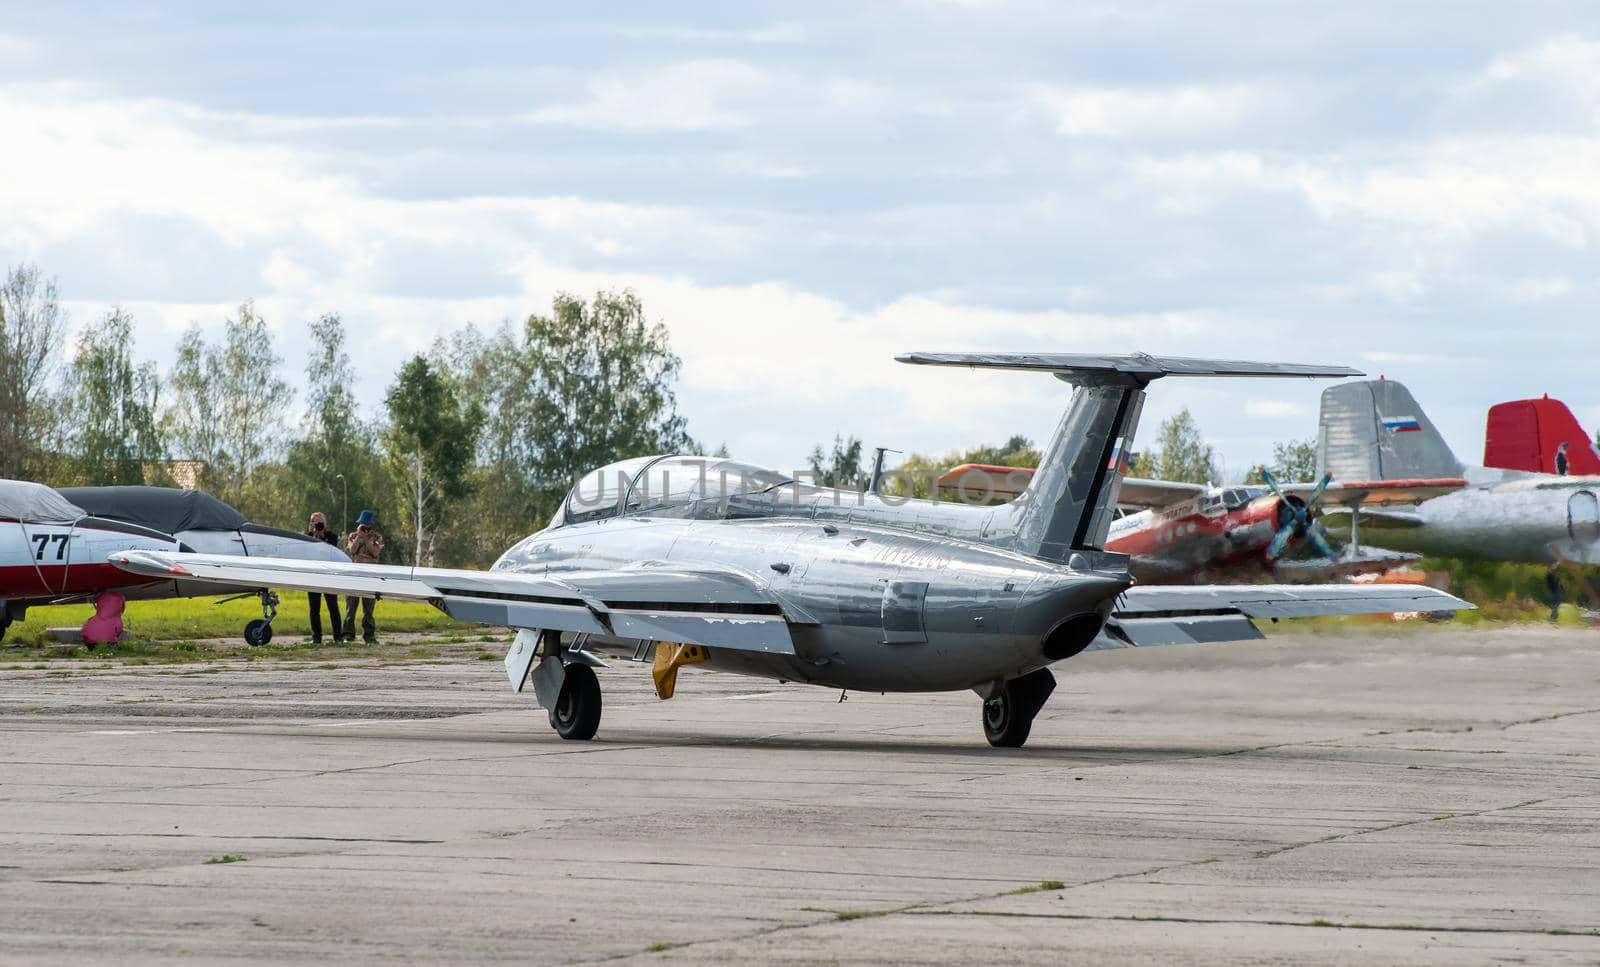 September 12, 2020, Kaluga region, Russia. The Aero L-29 Delfin training aircraft performs a training flight at the Oreshkovo airfield.